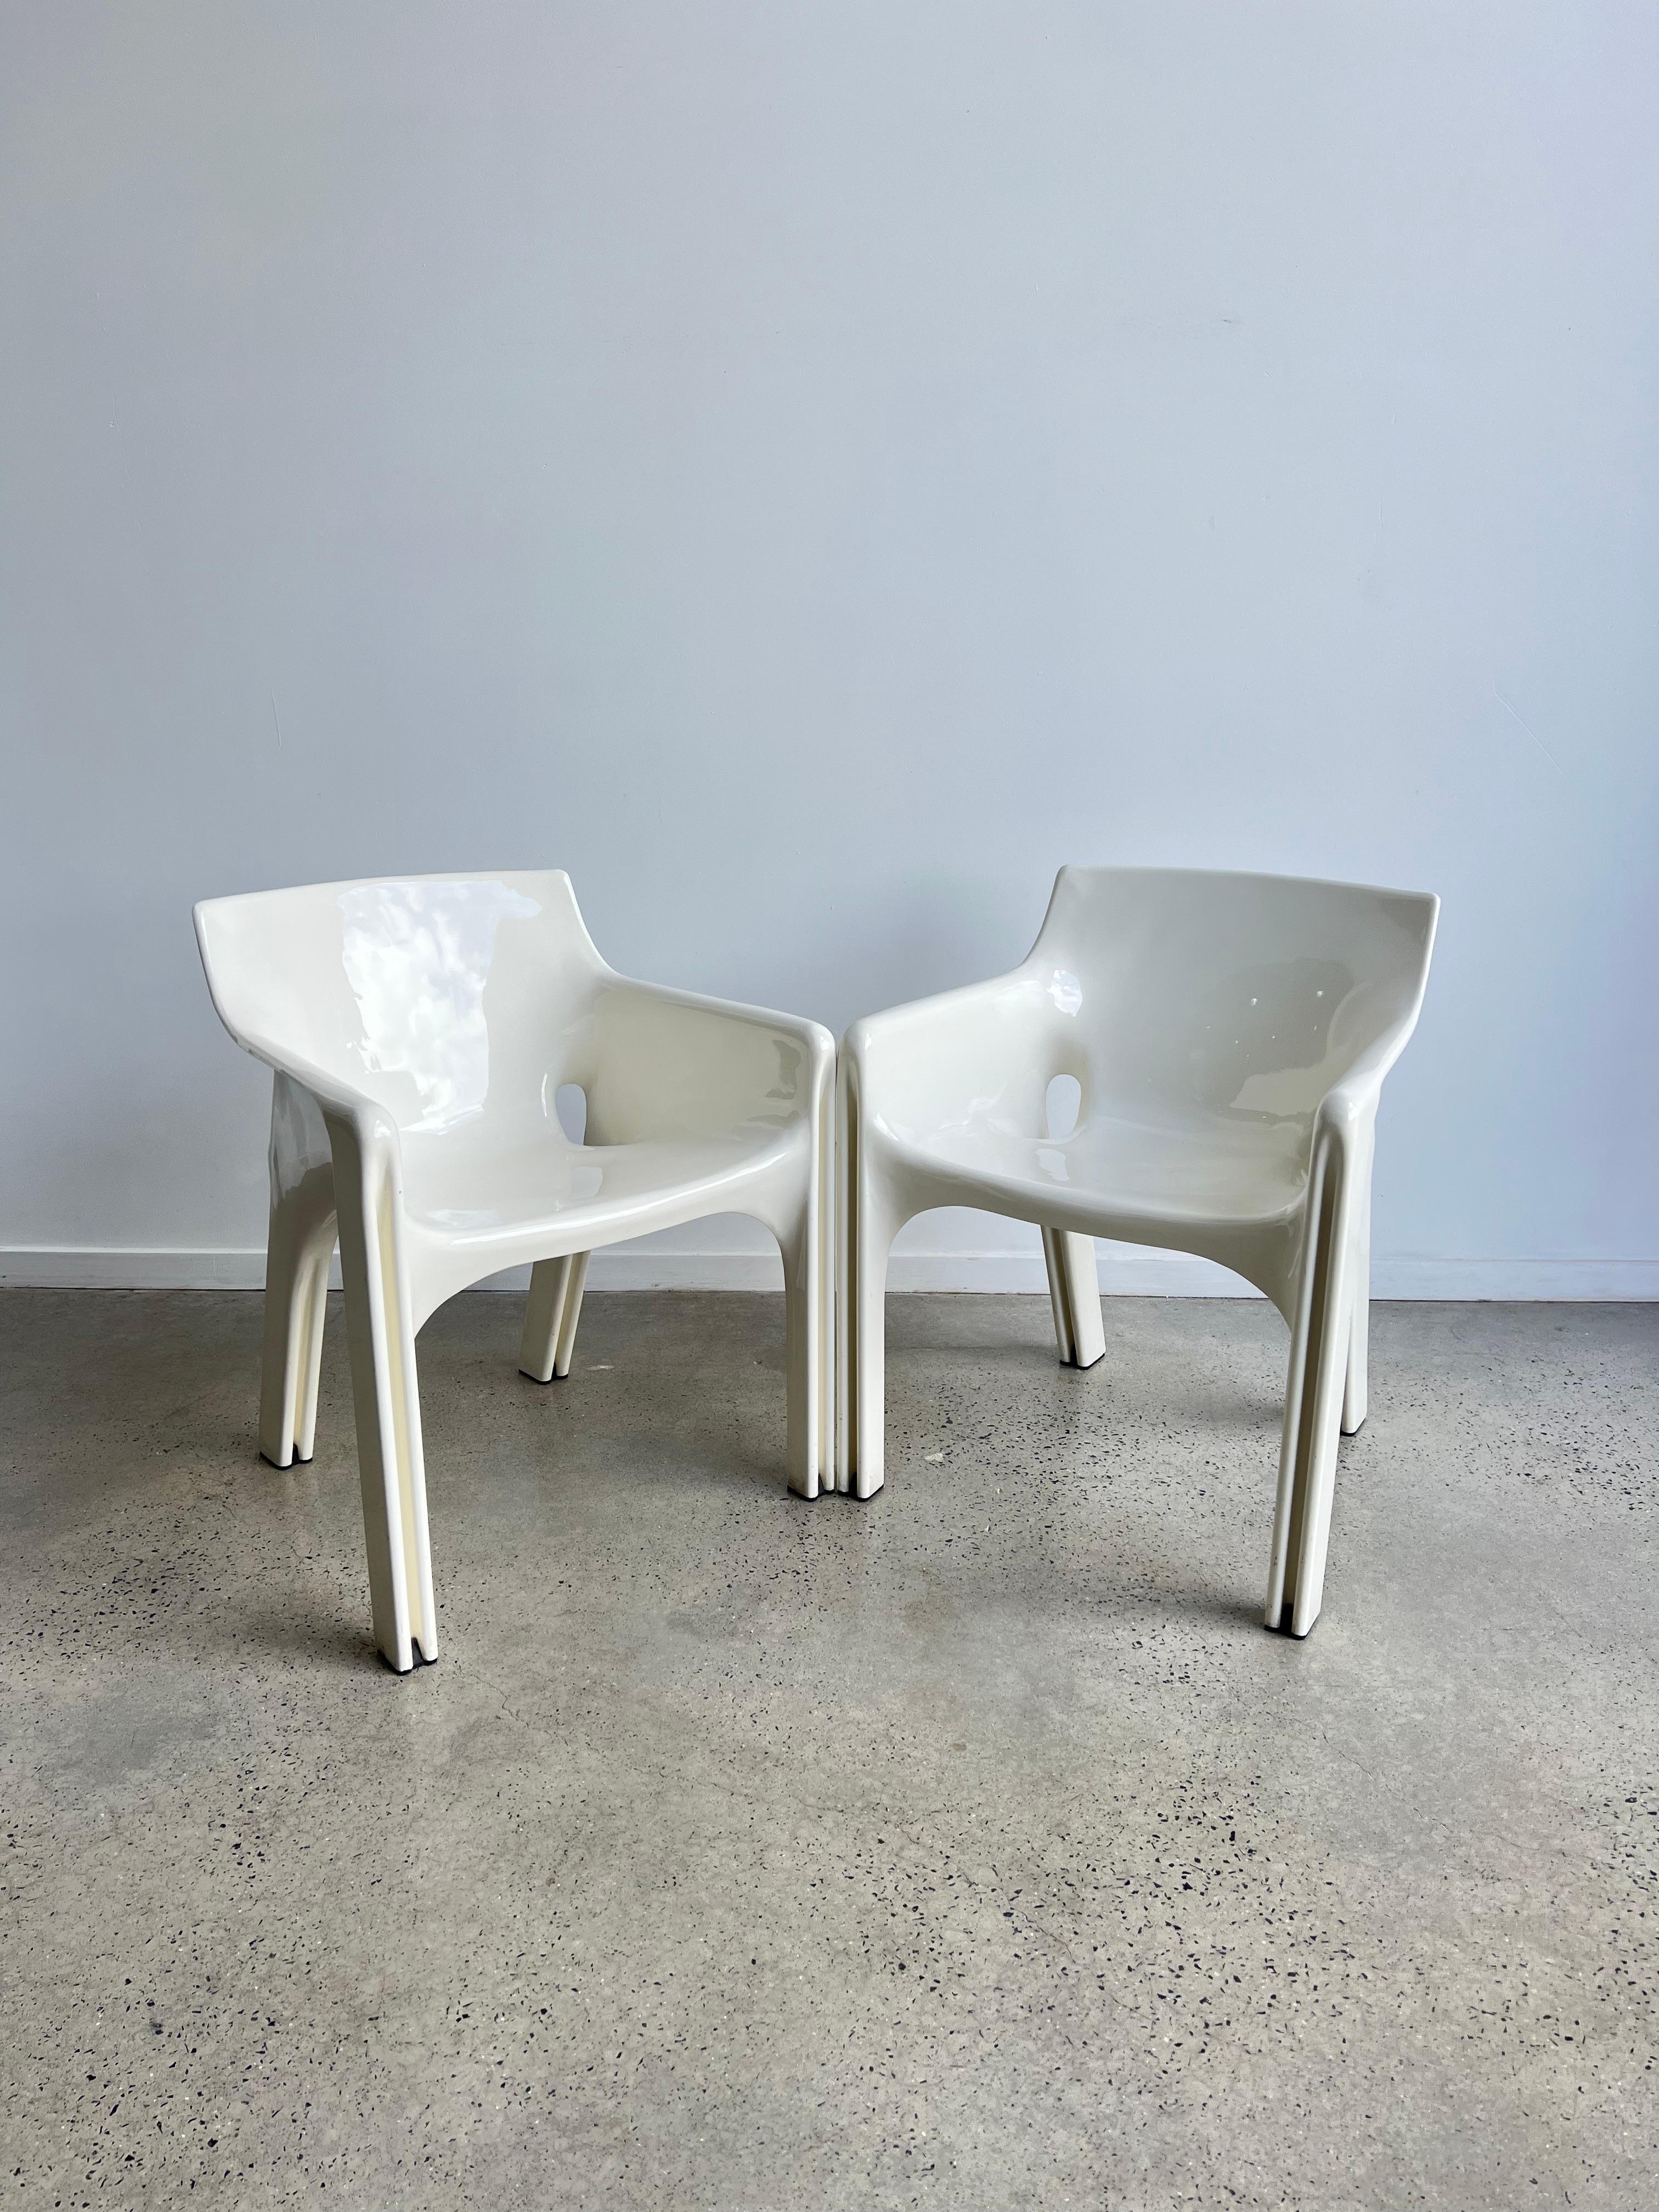 Beautiful white Vico Magistretti chairs for Artemide.
Model: Gaudi 
Almost in perfect conditions.